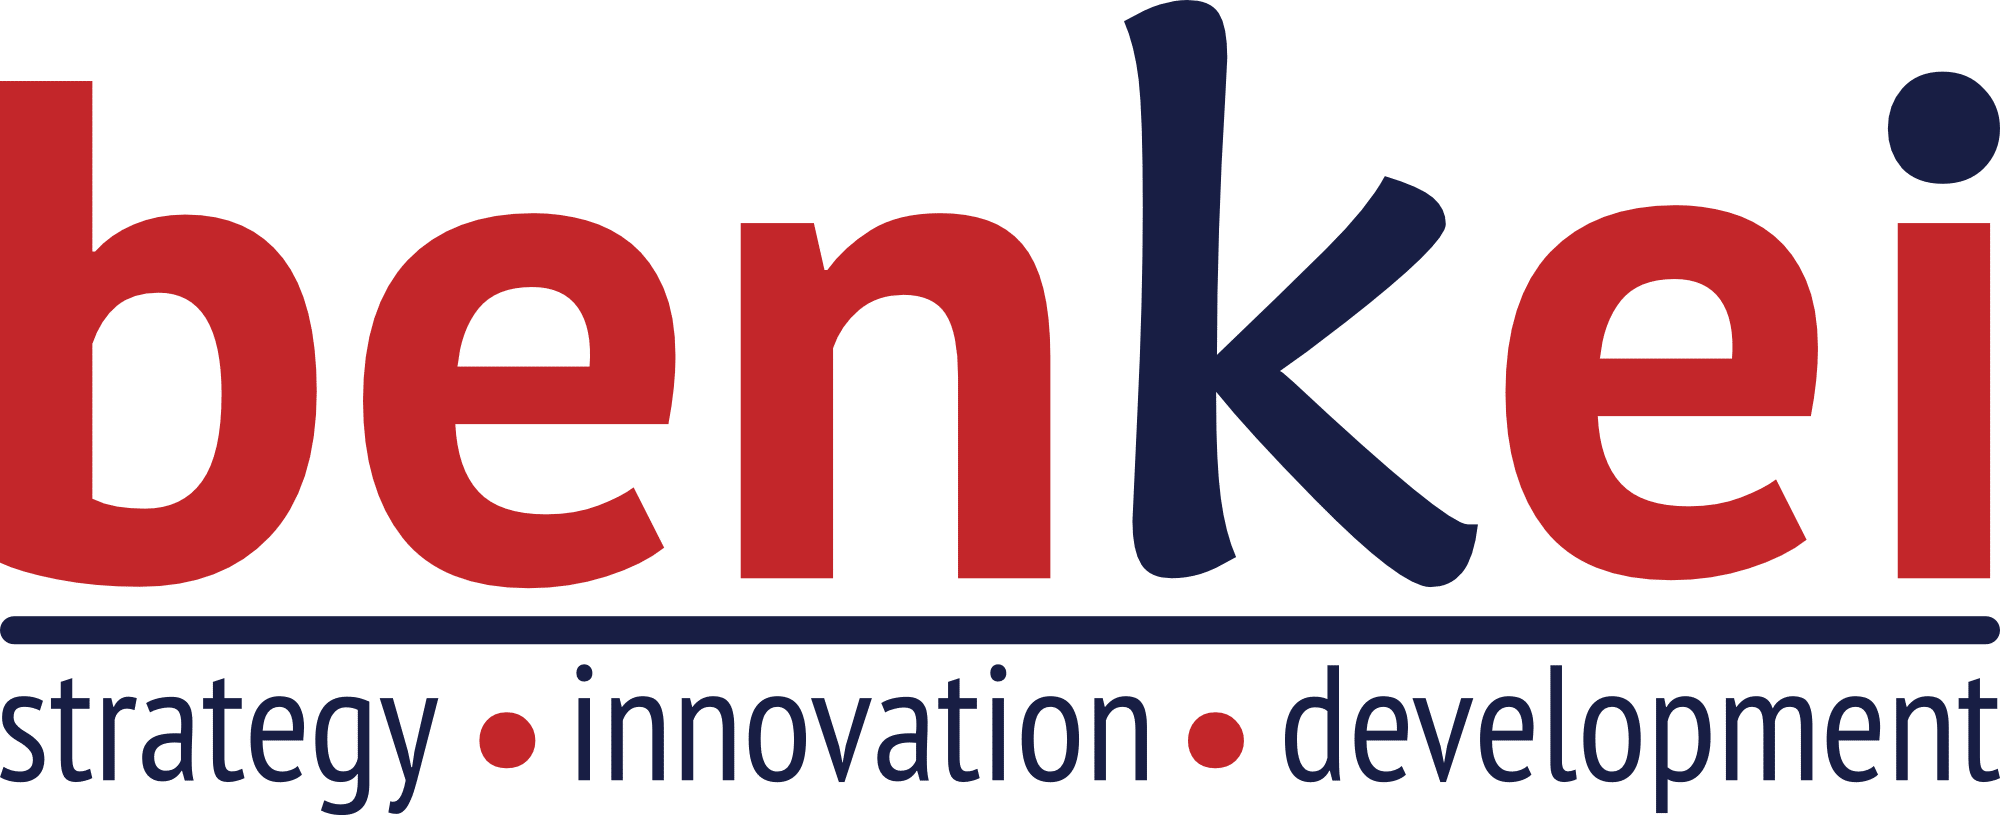 benkei_logo-EN